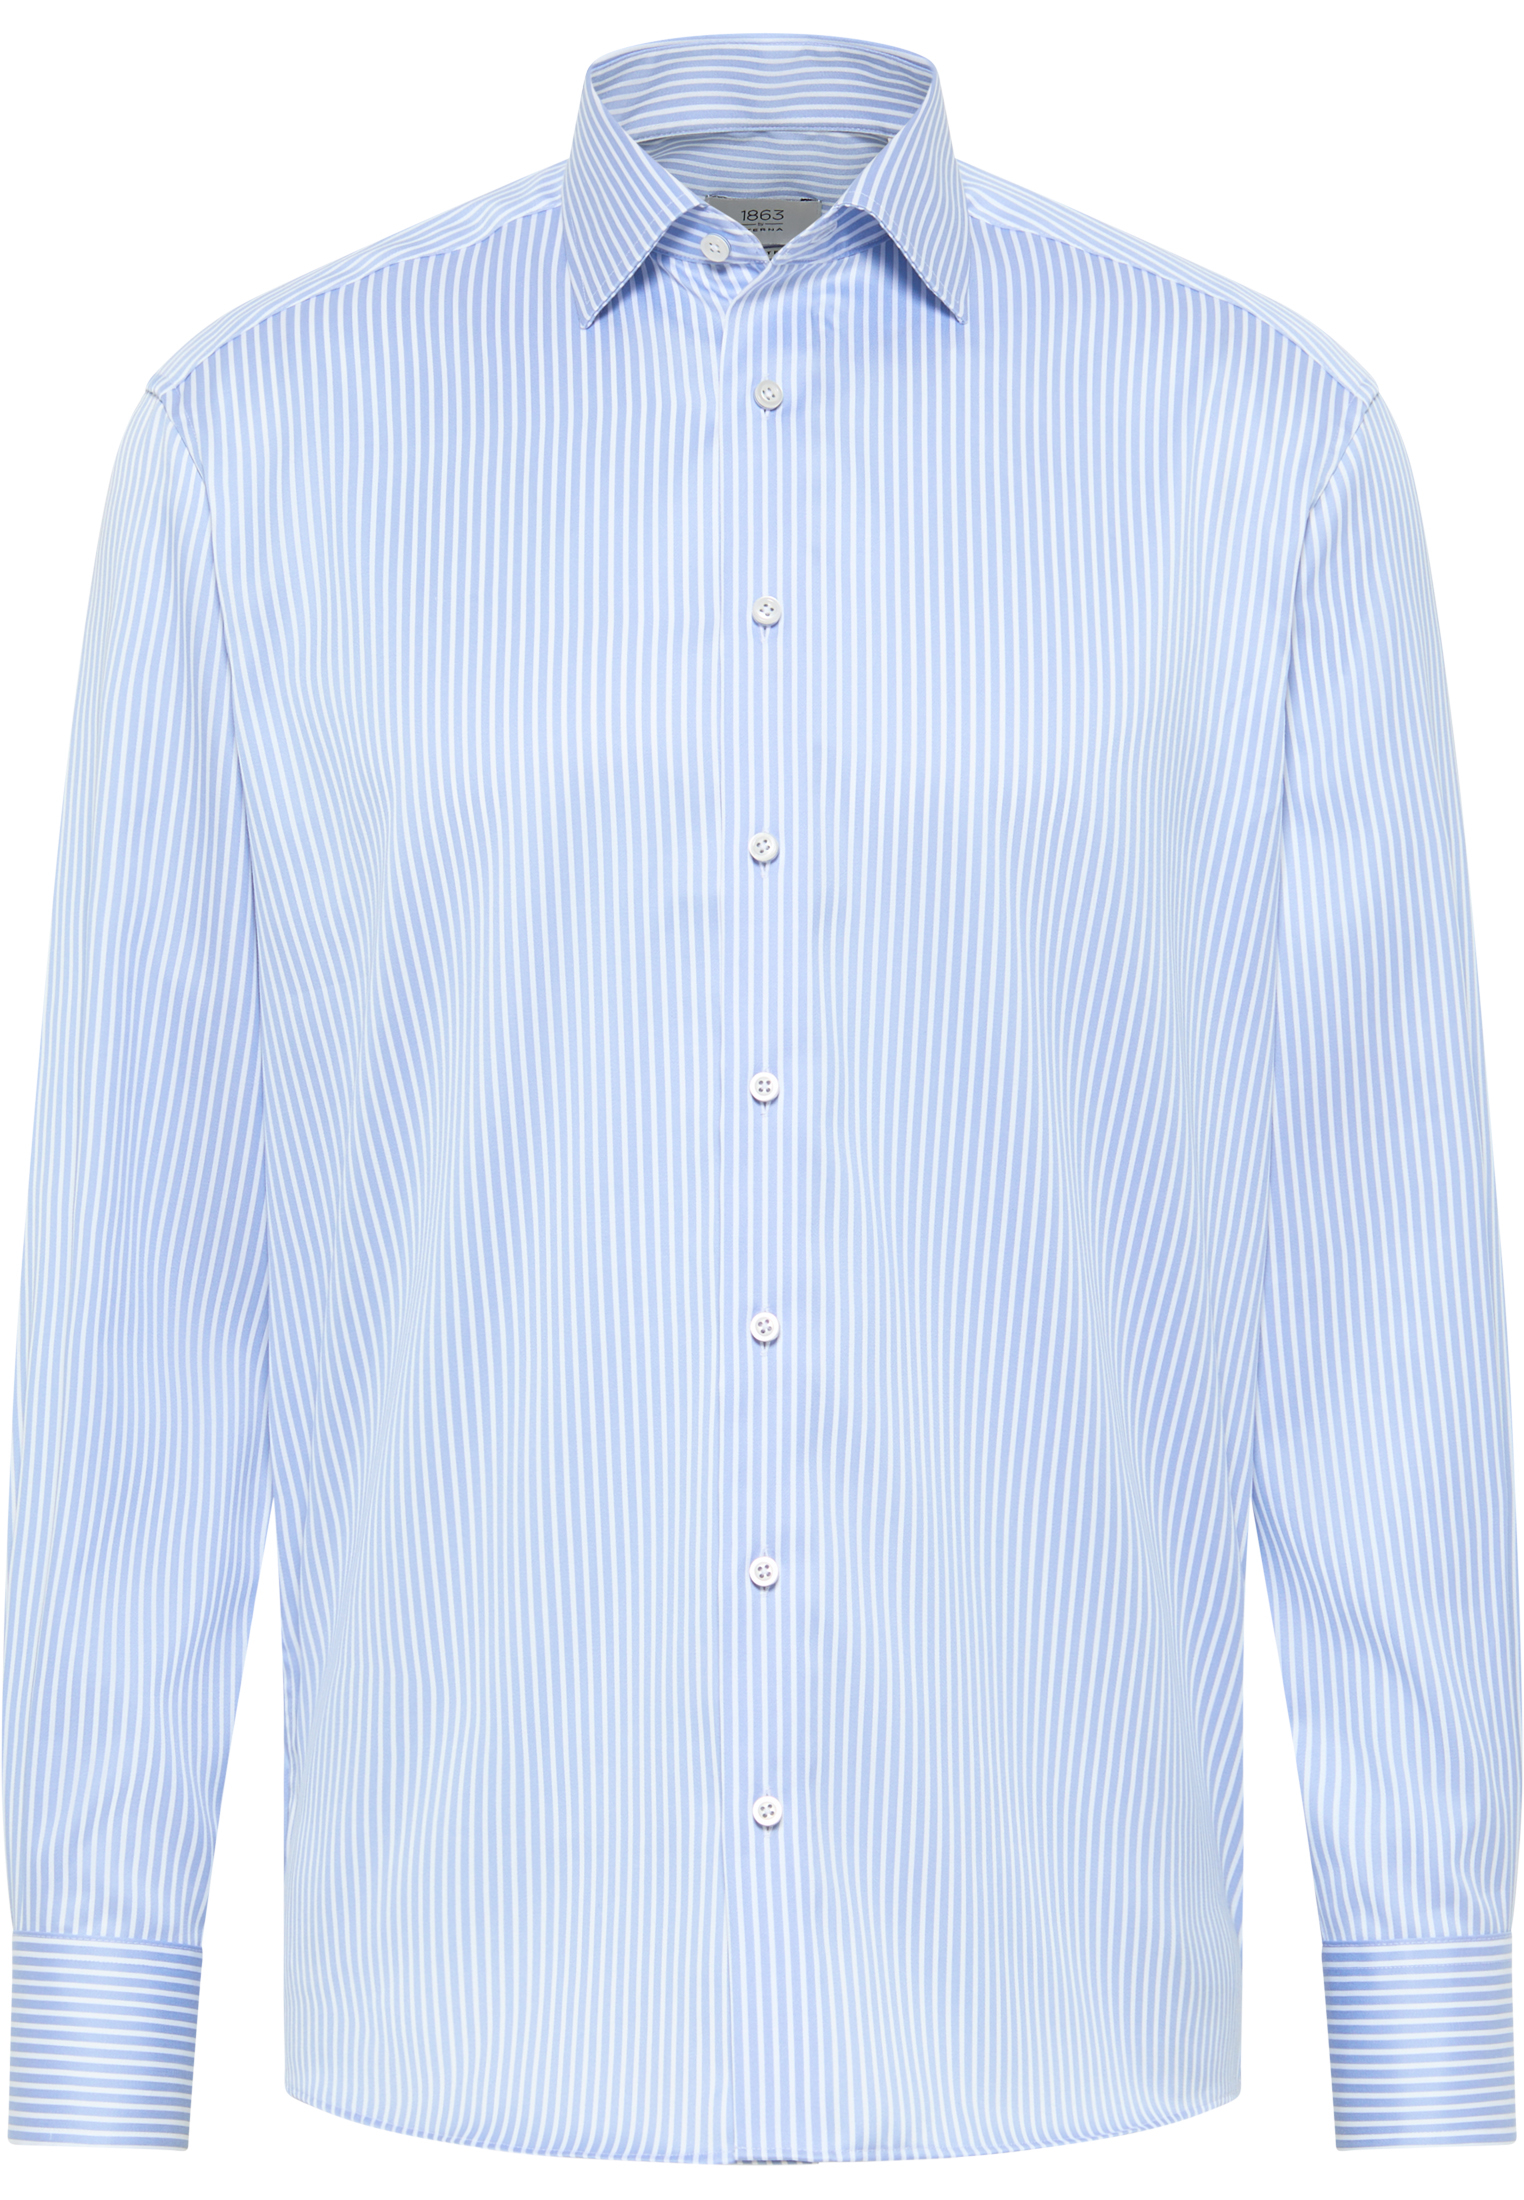 ETERNA striped cotton shirt COMFORT FIT